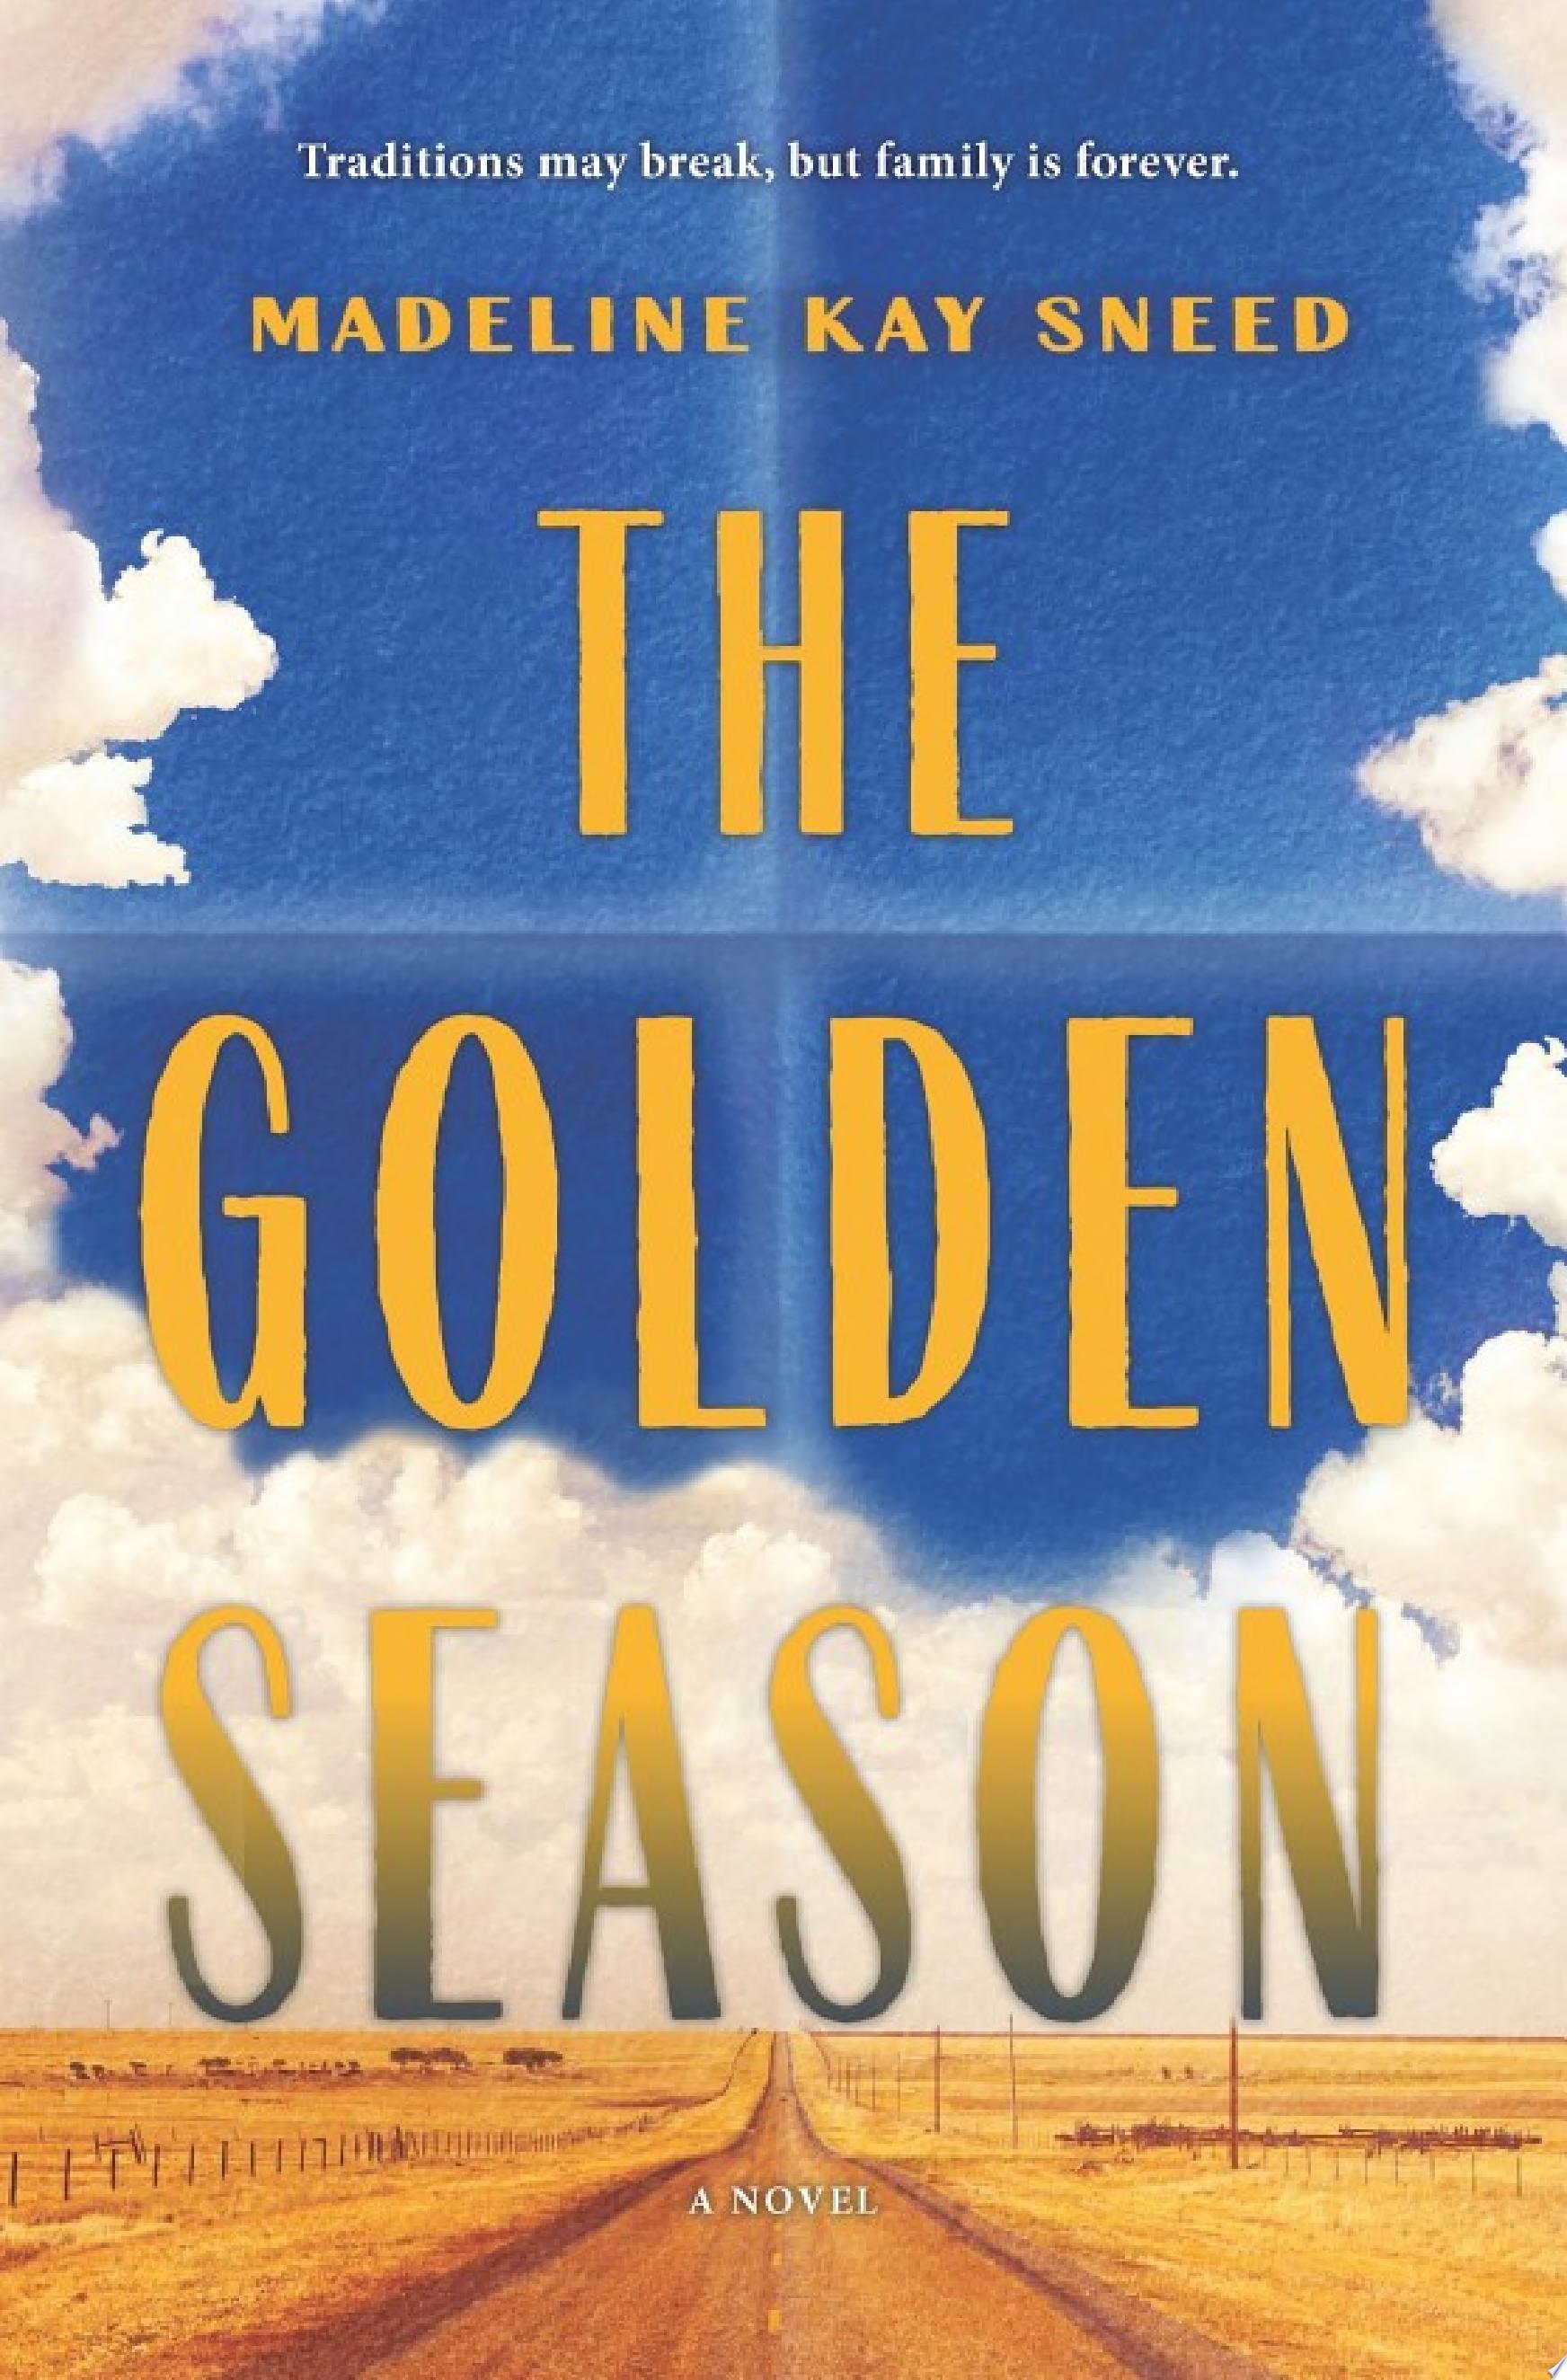 Image for "The Golden Season"